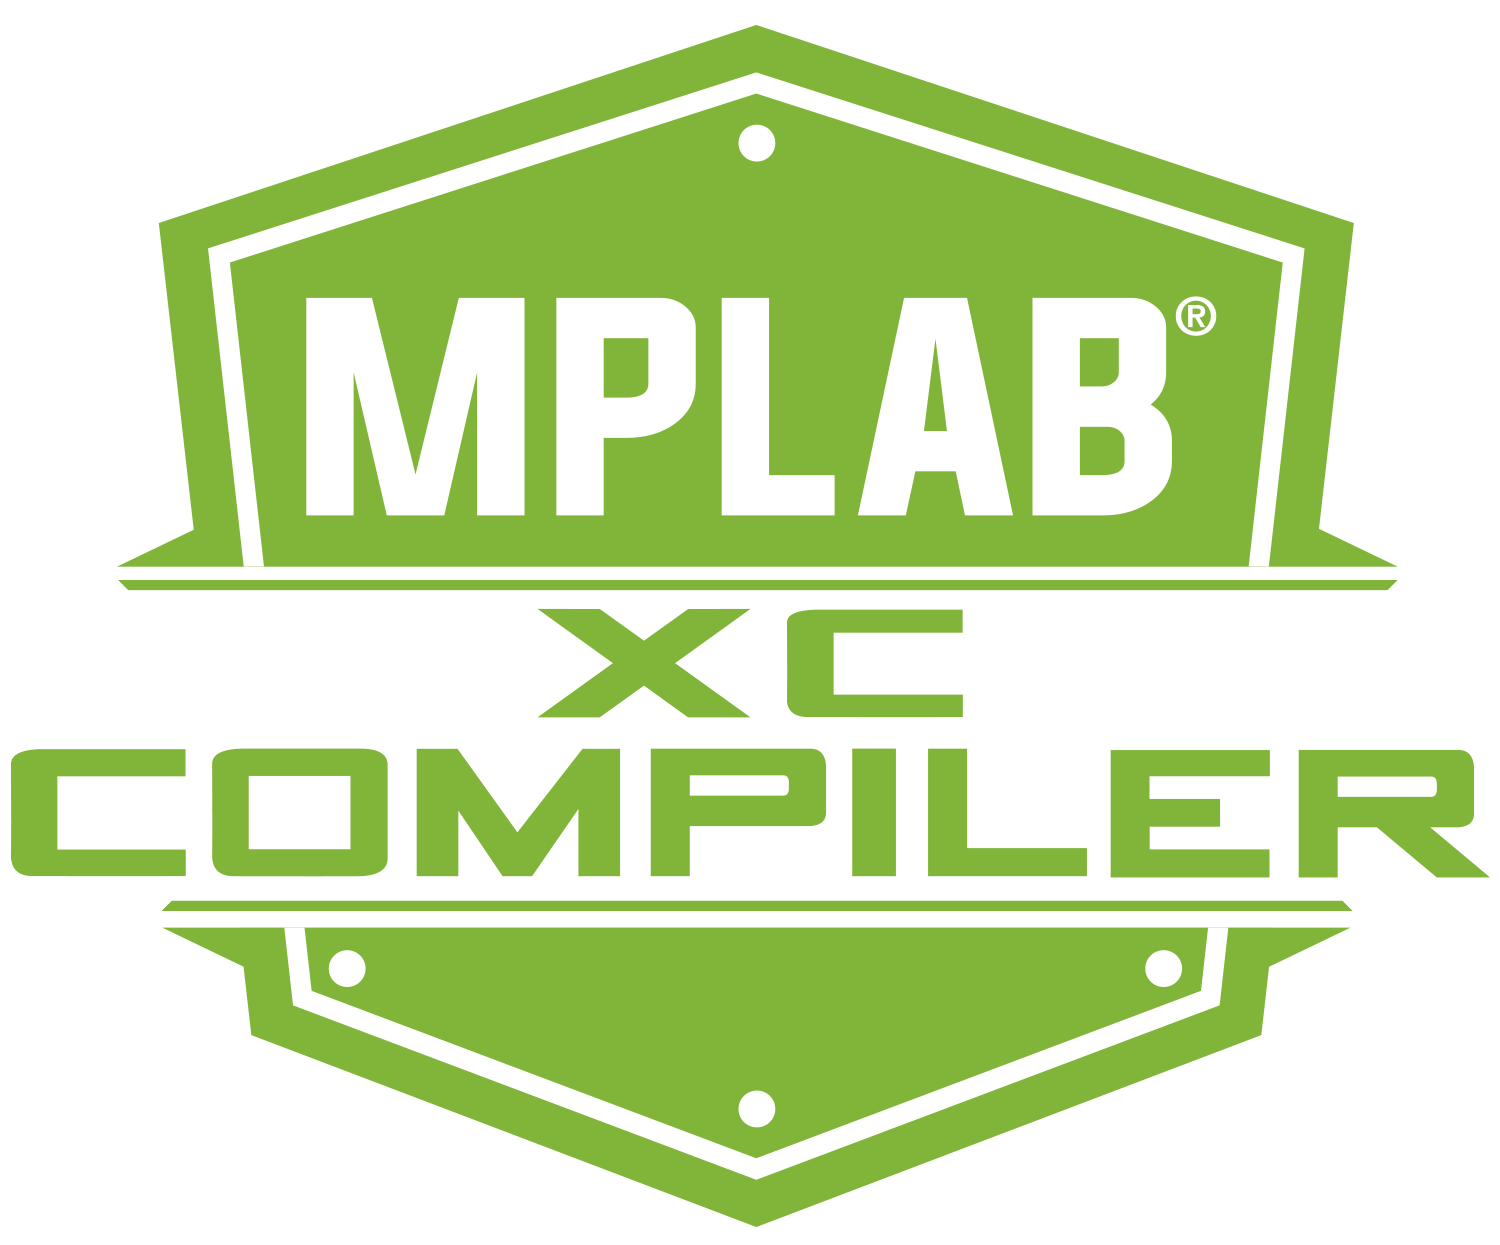 Mplab xc8 c compiler keygen download torrent